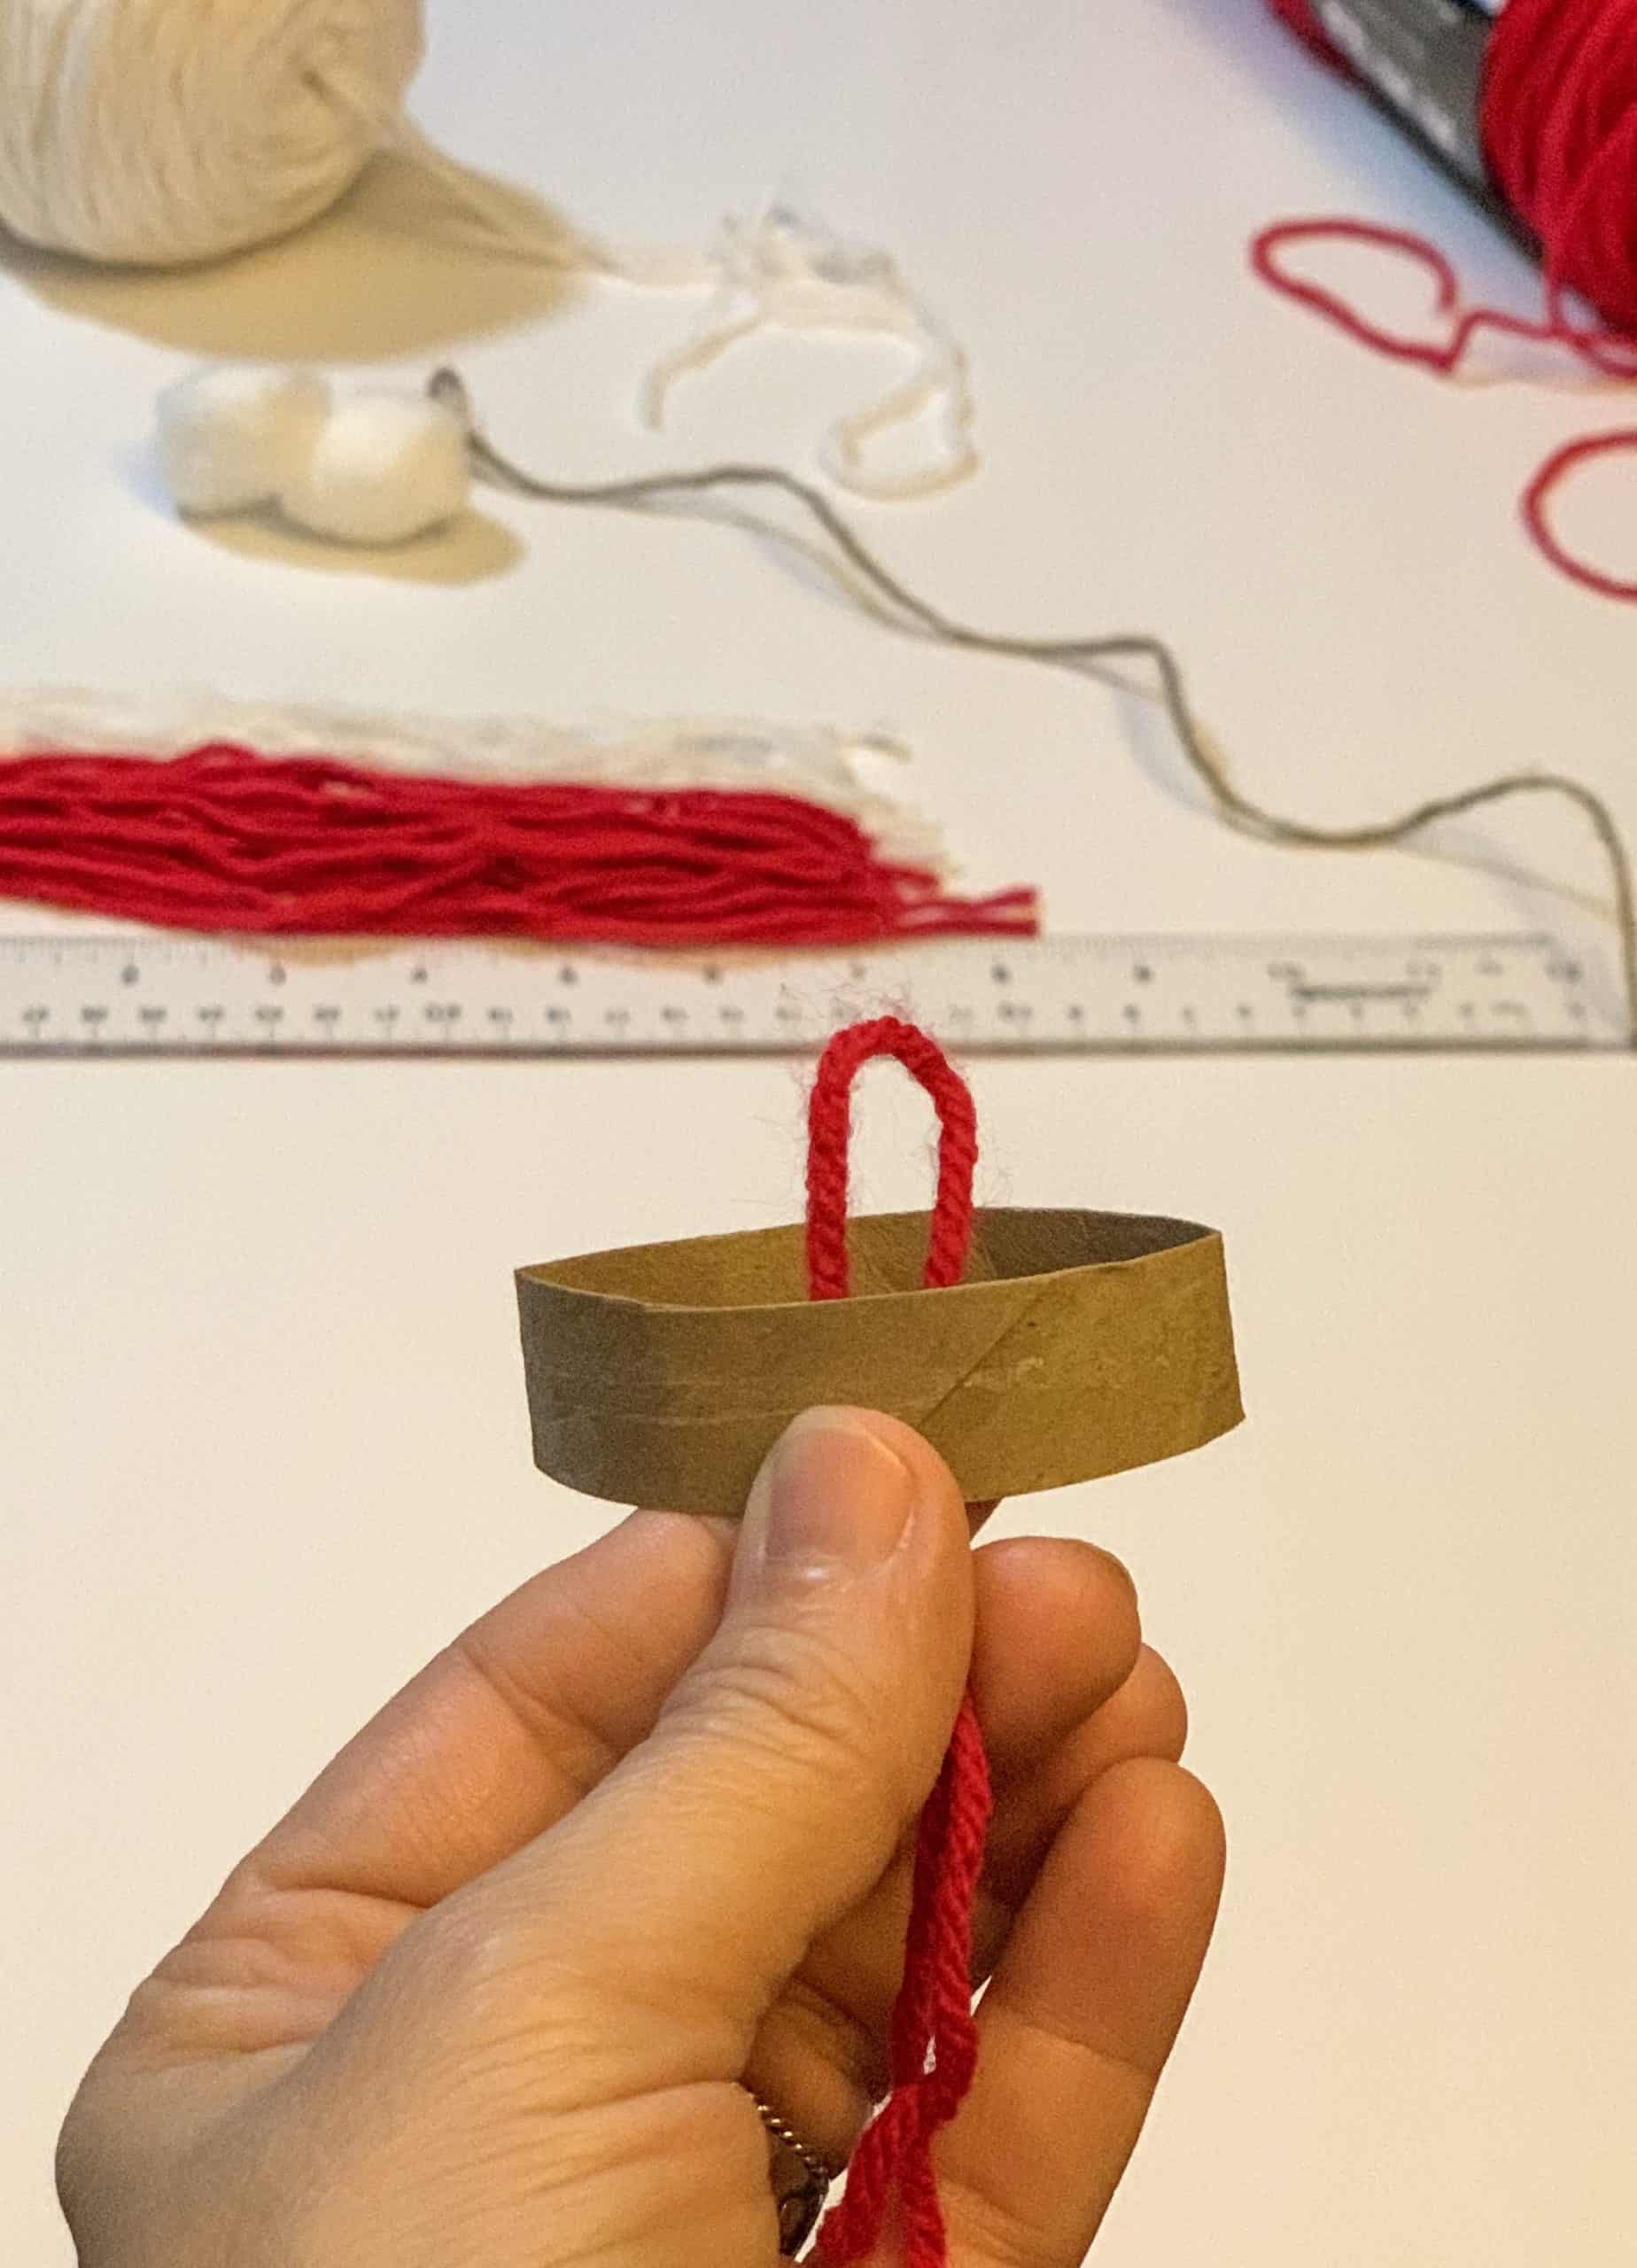 looping yarn through cardboard circle.